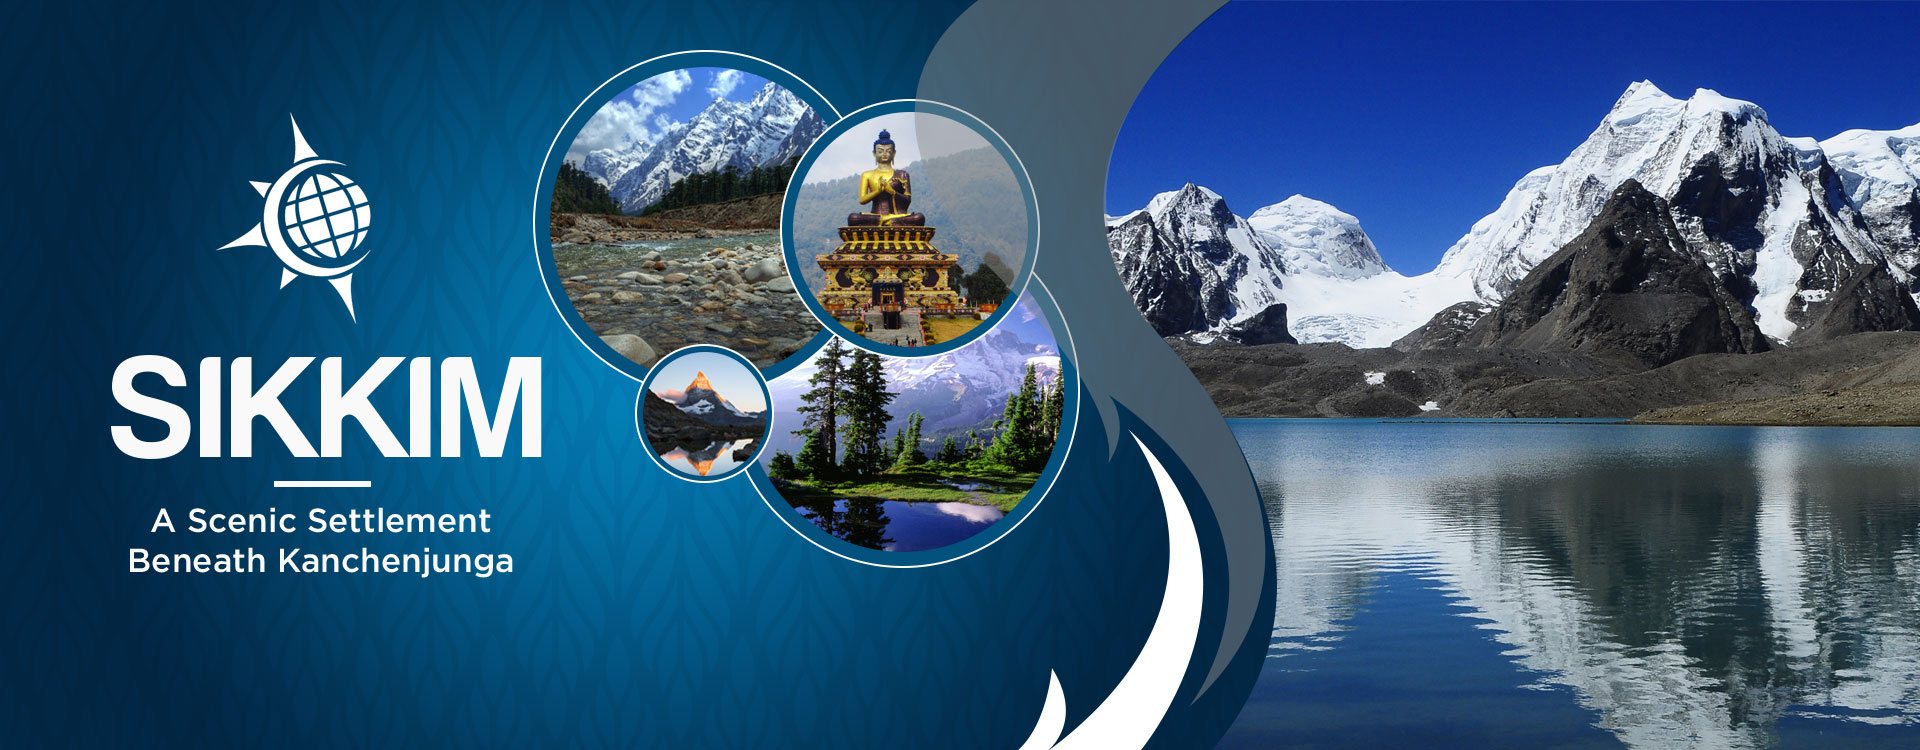 Tour Sikkim With Disha Tours & Travel Operator